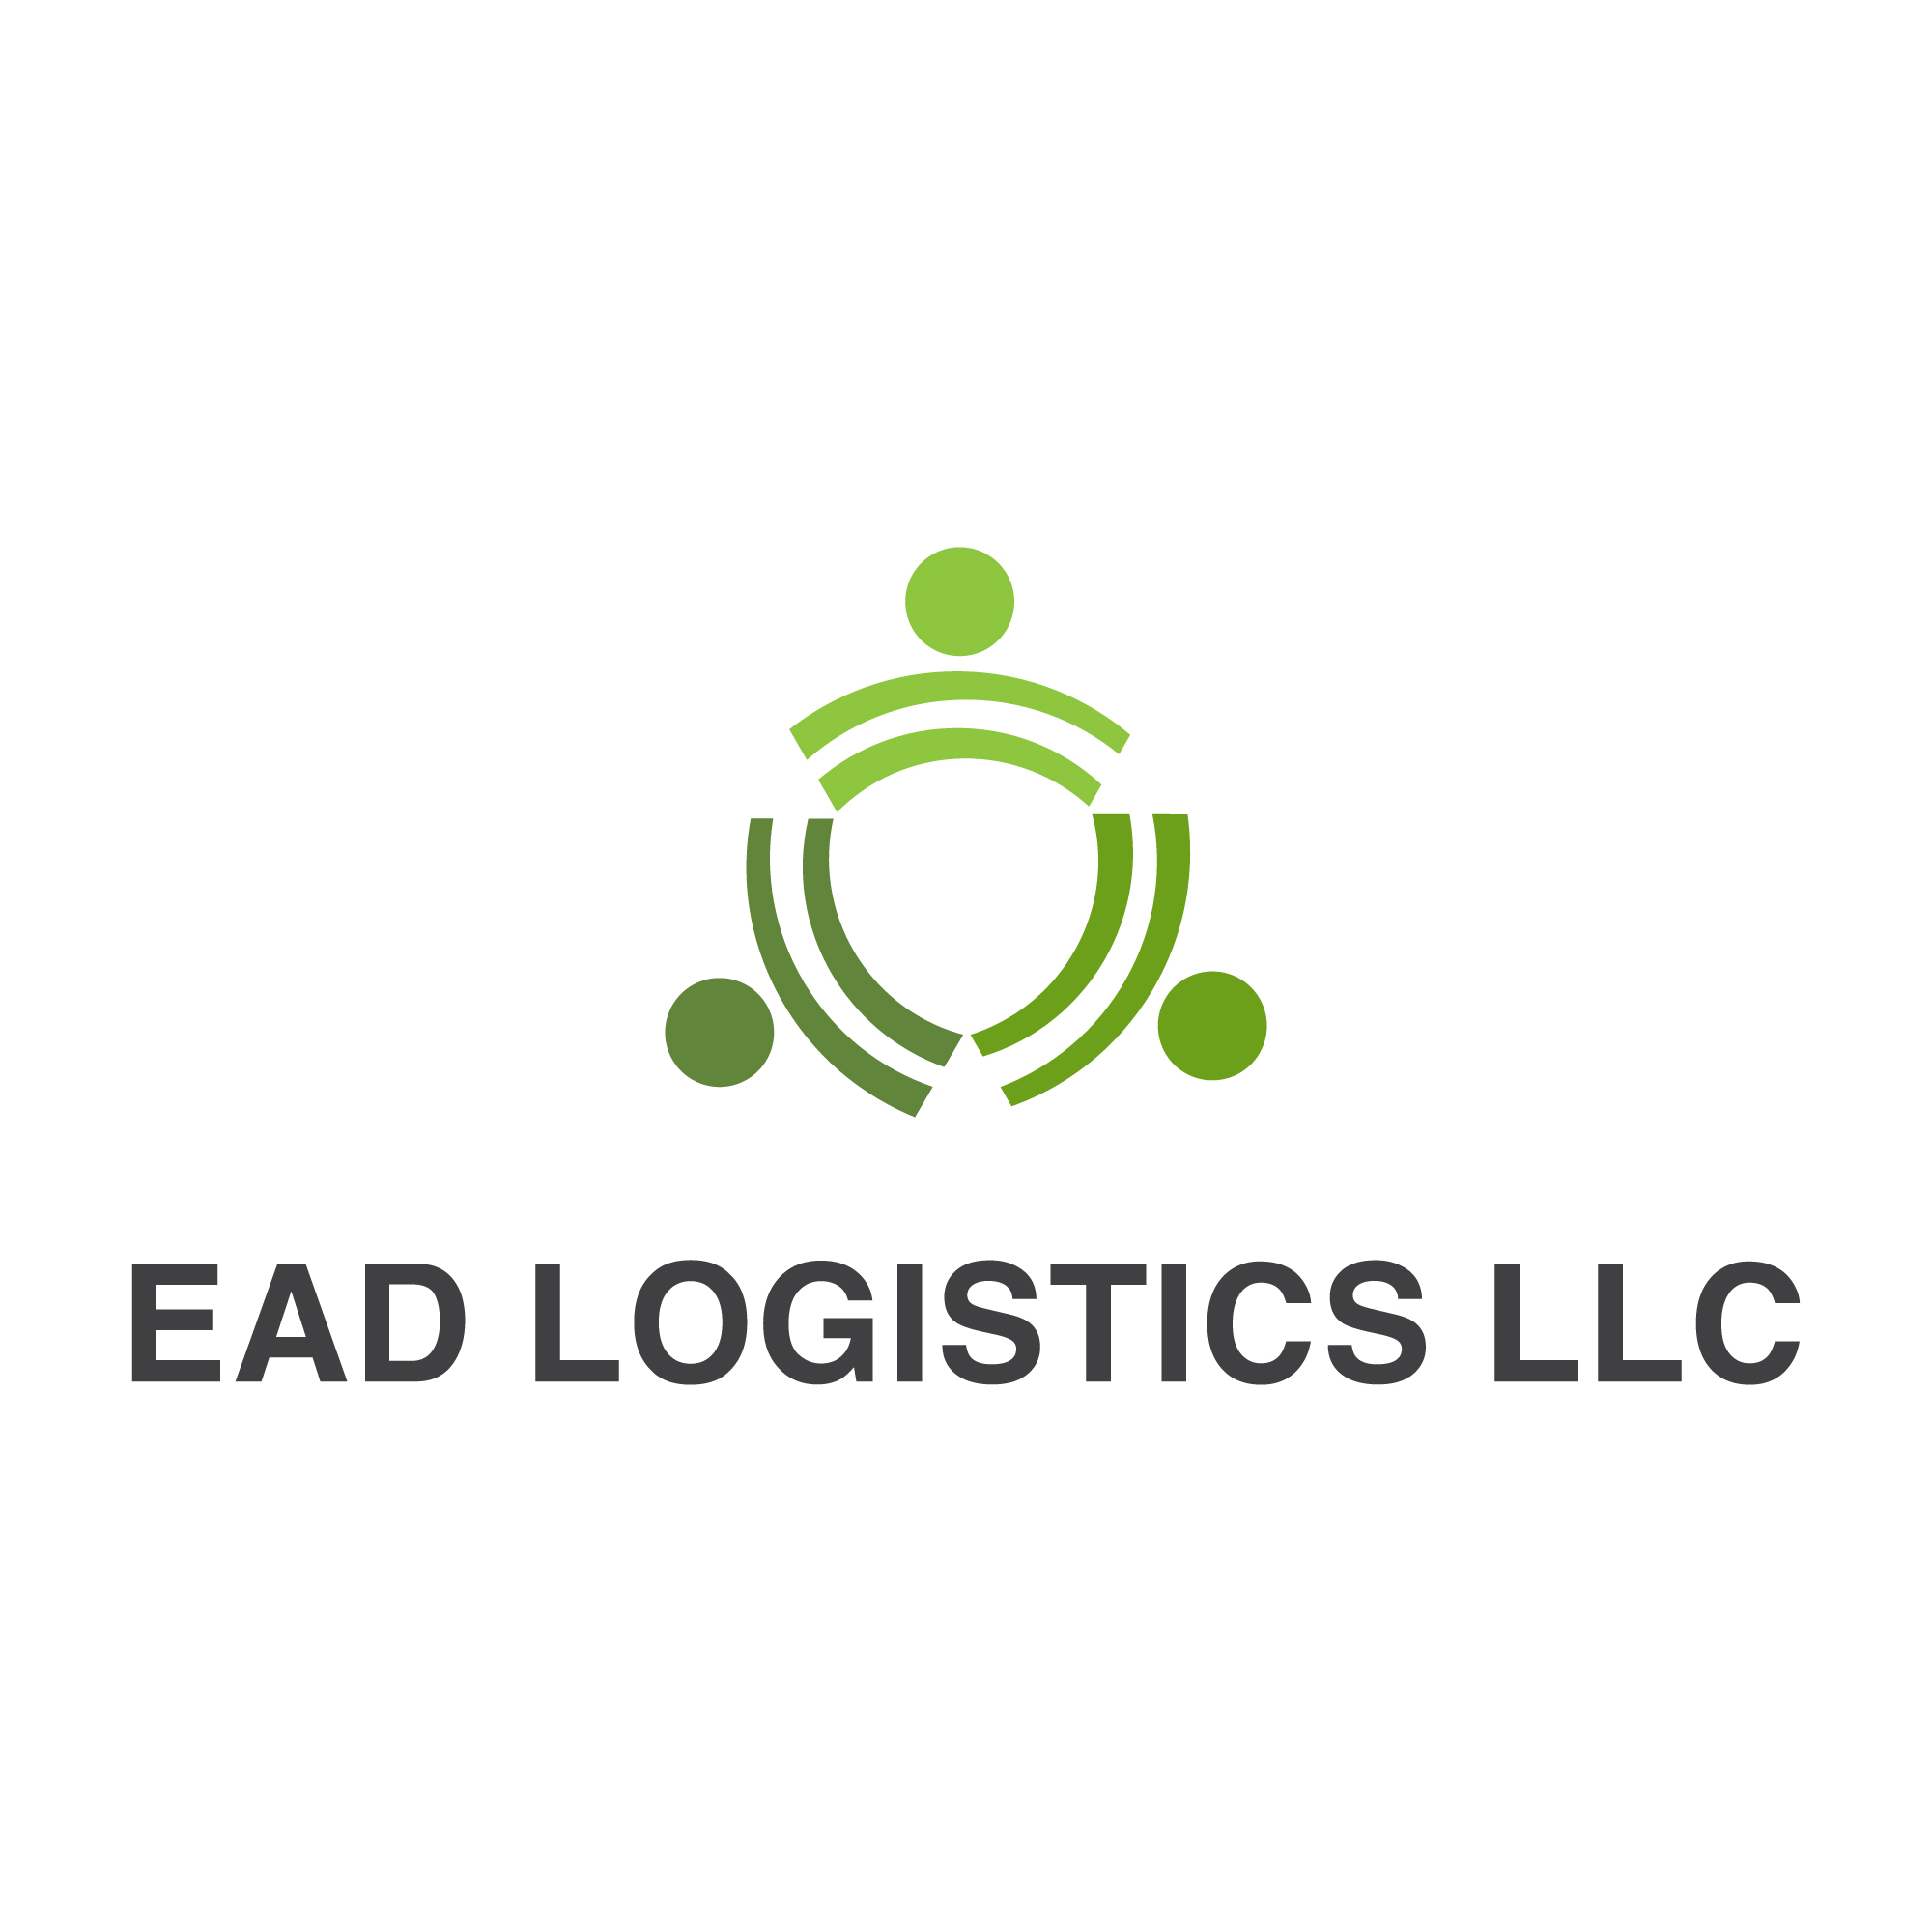 EAD LOGISTICS LLC